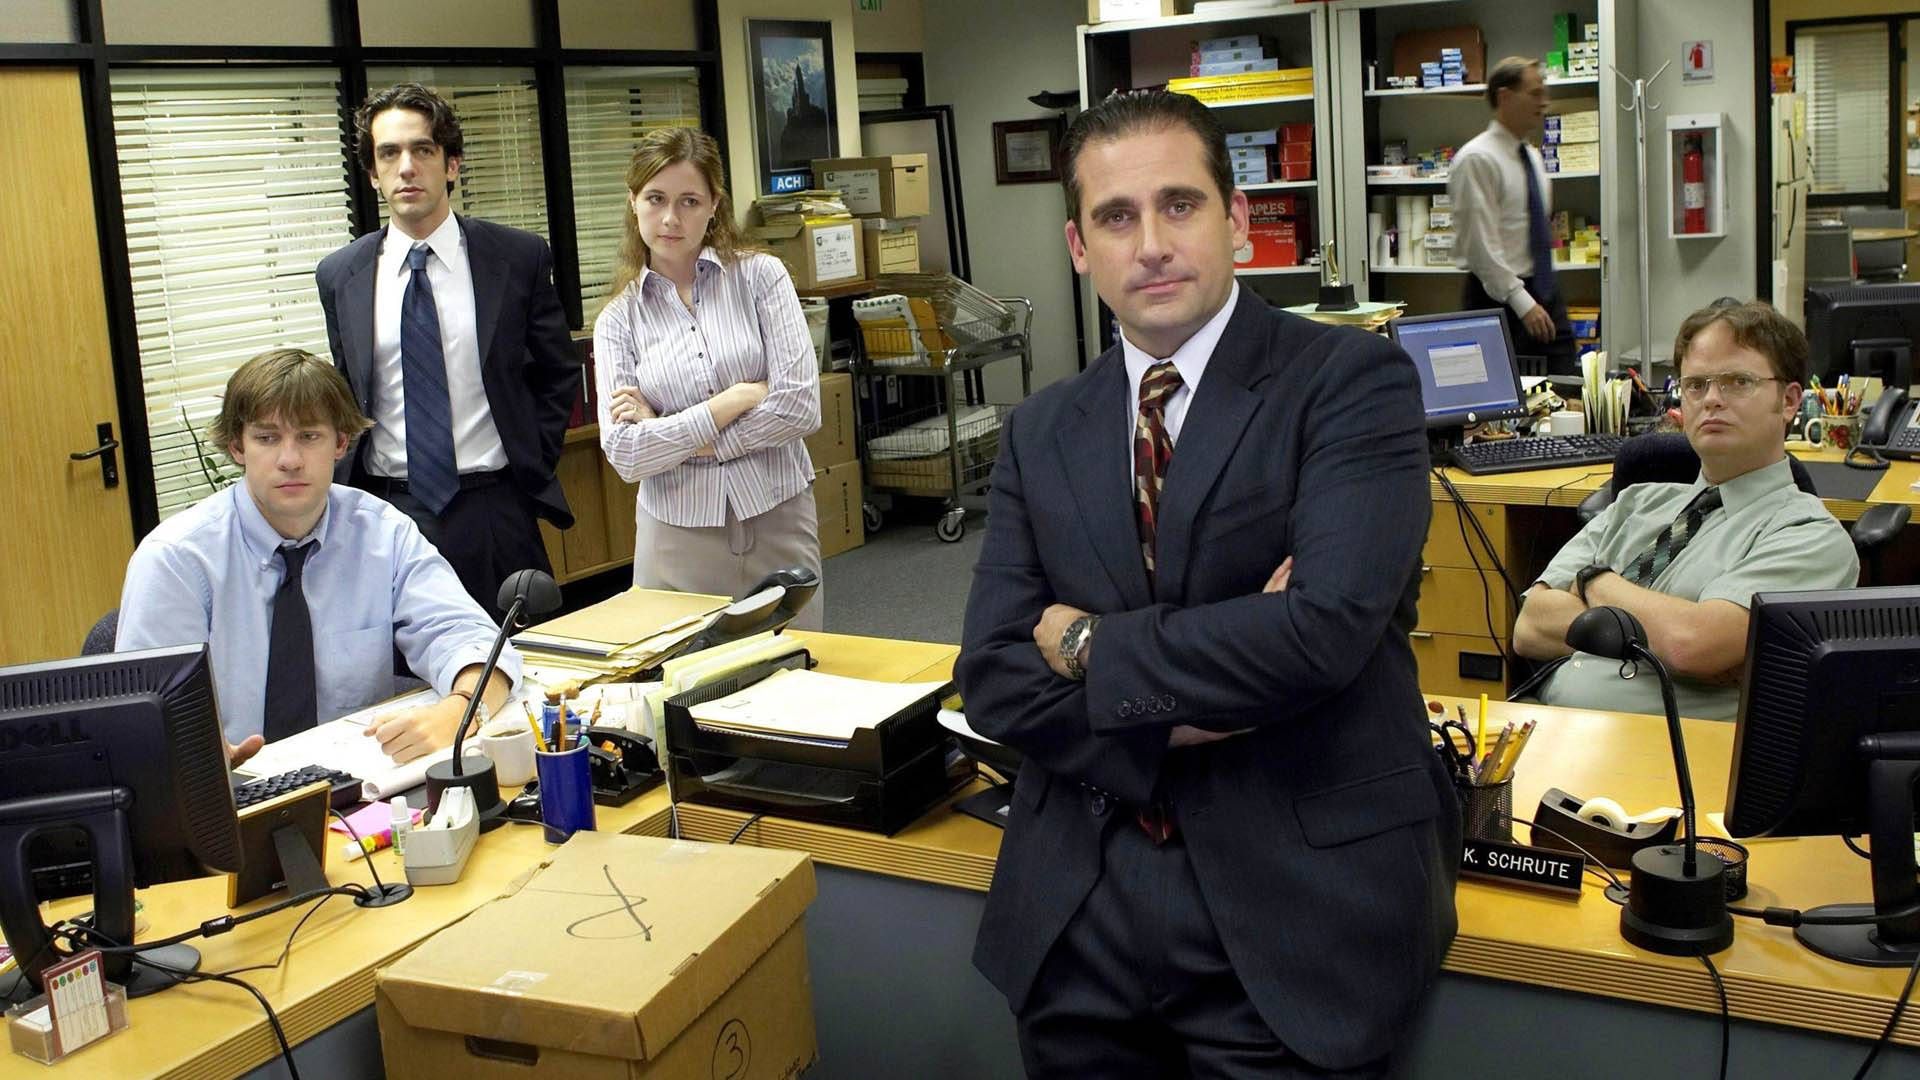 The Office cast at desks